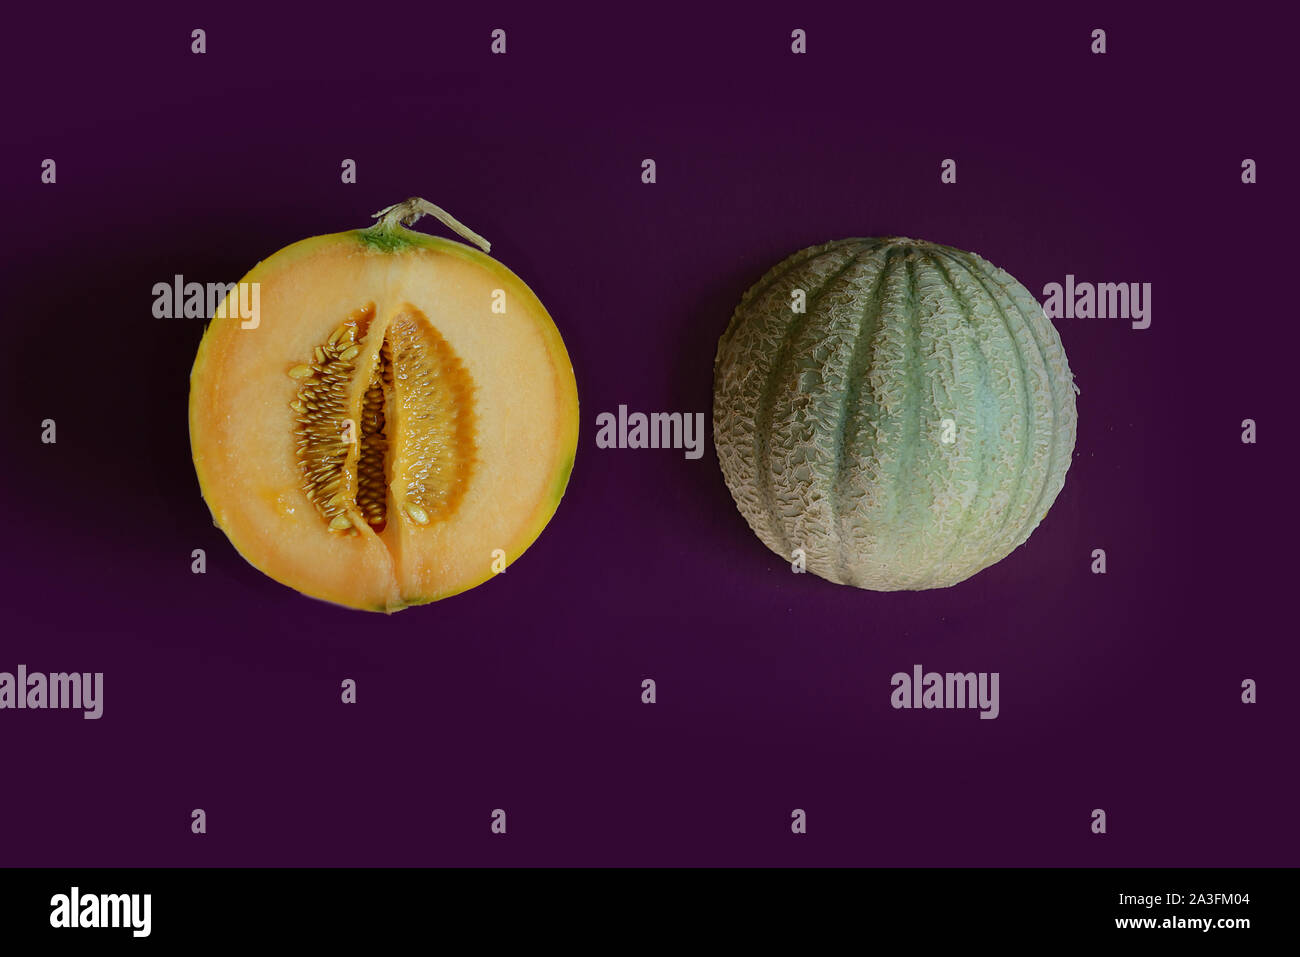 Two halves of cantaloupe melon on purple background Stock Photo